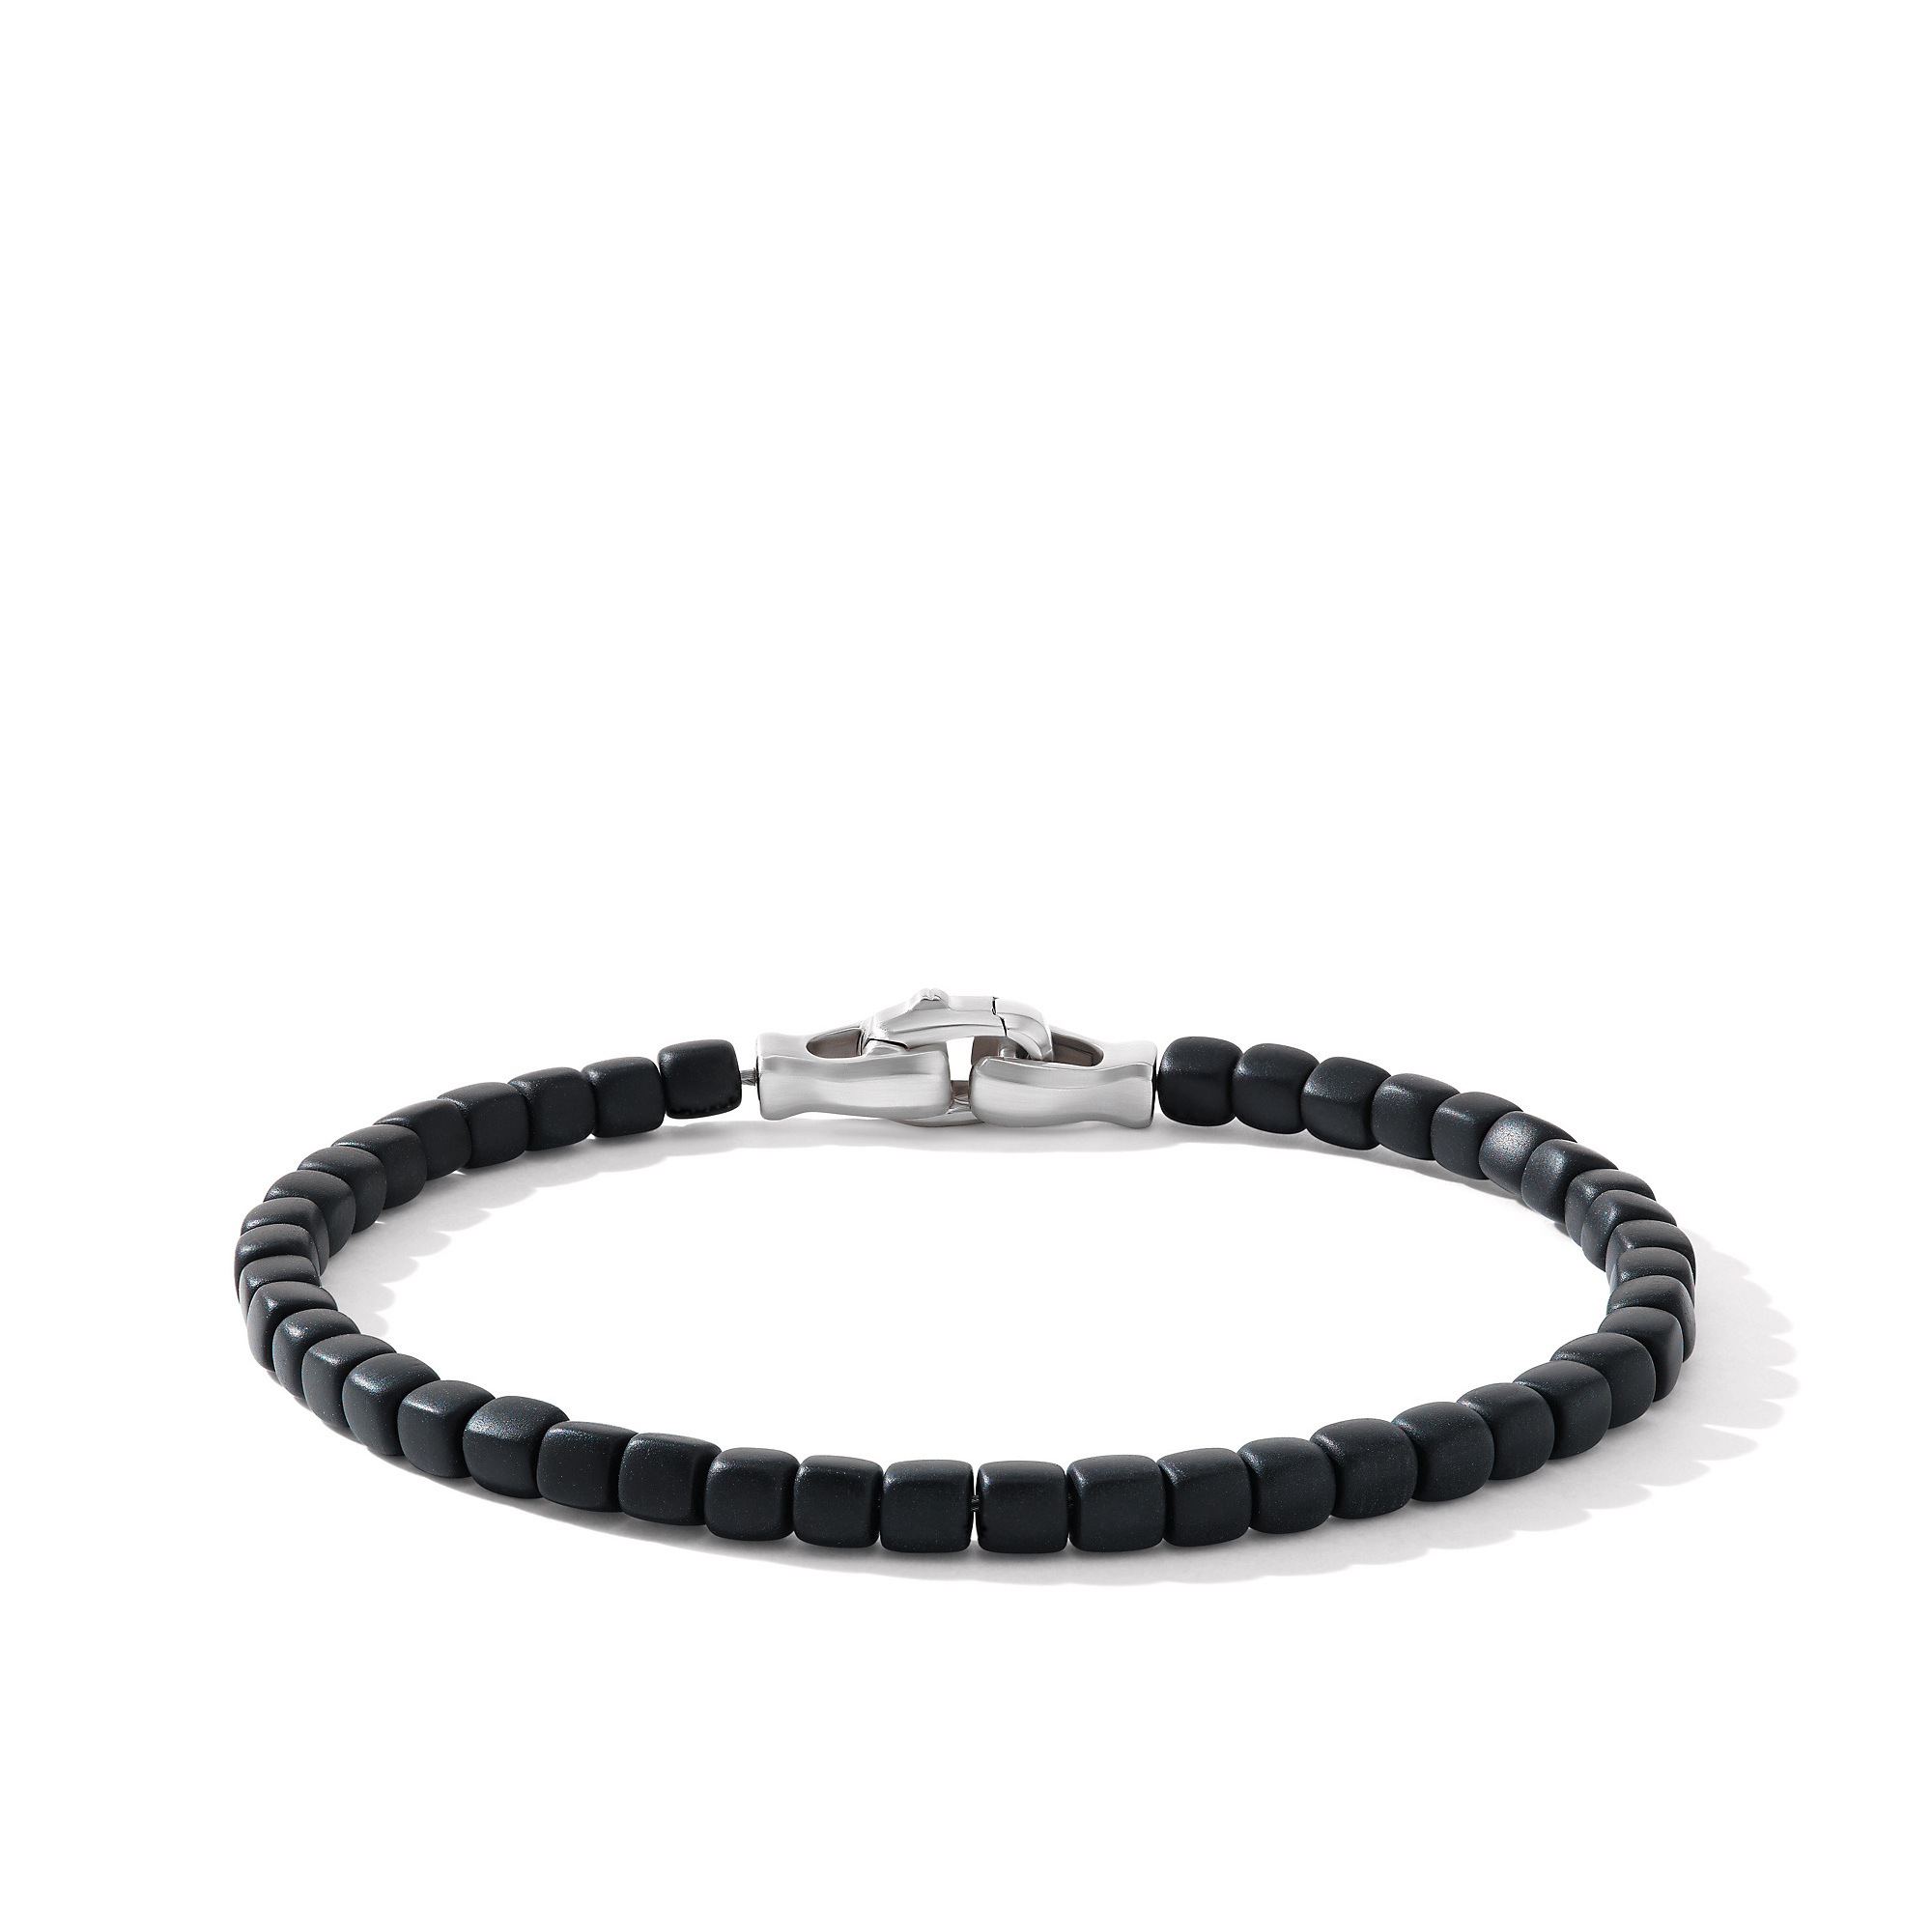 David Yurman Spiritual Beads Cushion Bracelet - Sterling Silver with Black Onyx